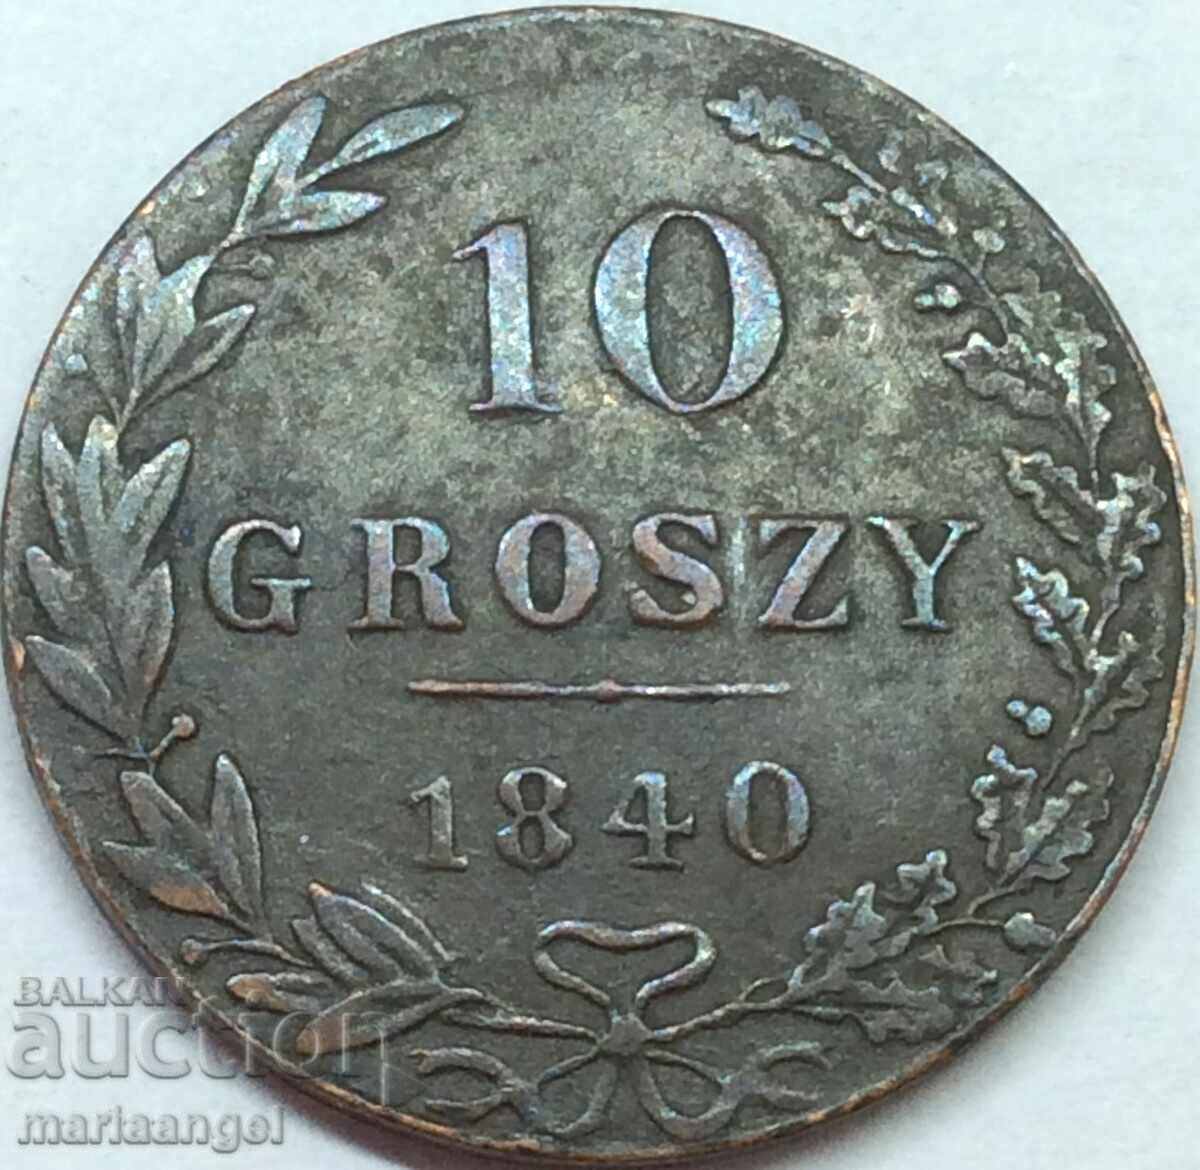 10 Groshis 1840 Poland under Russia Alexander II (1818-1881) silver